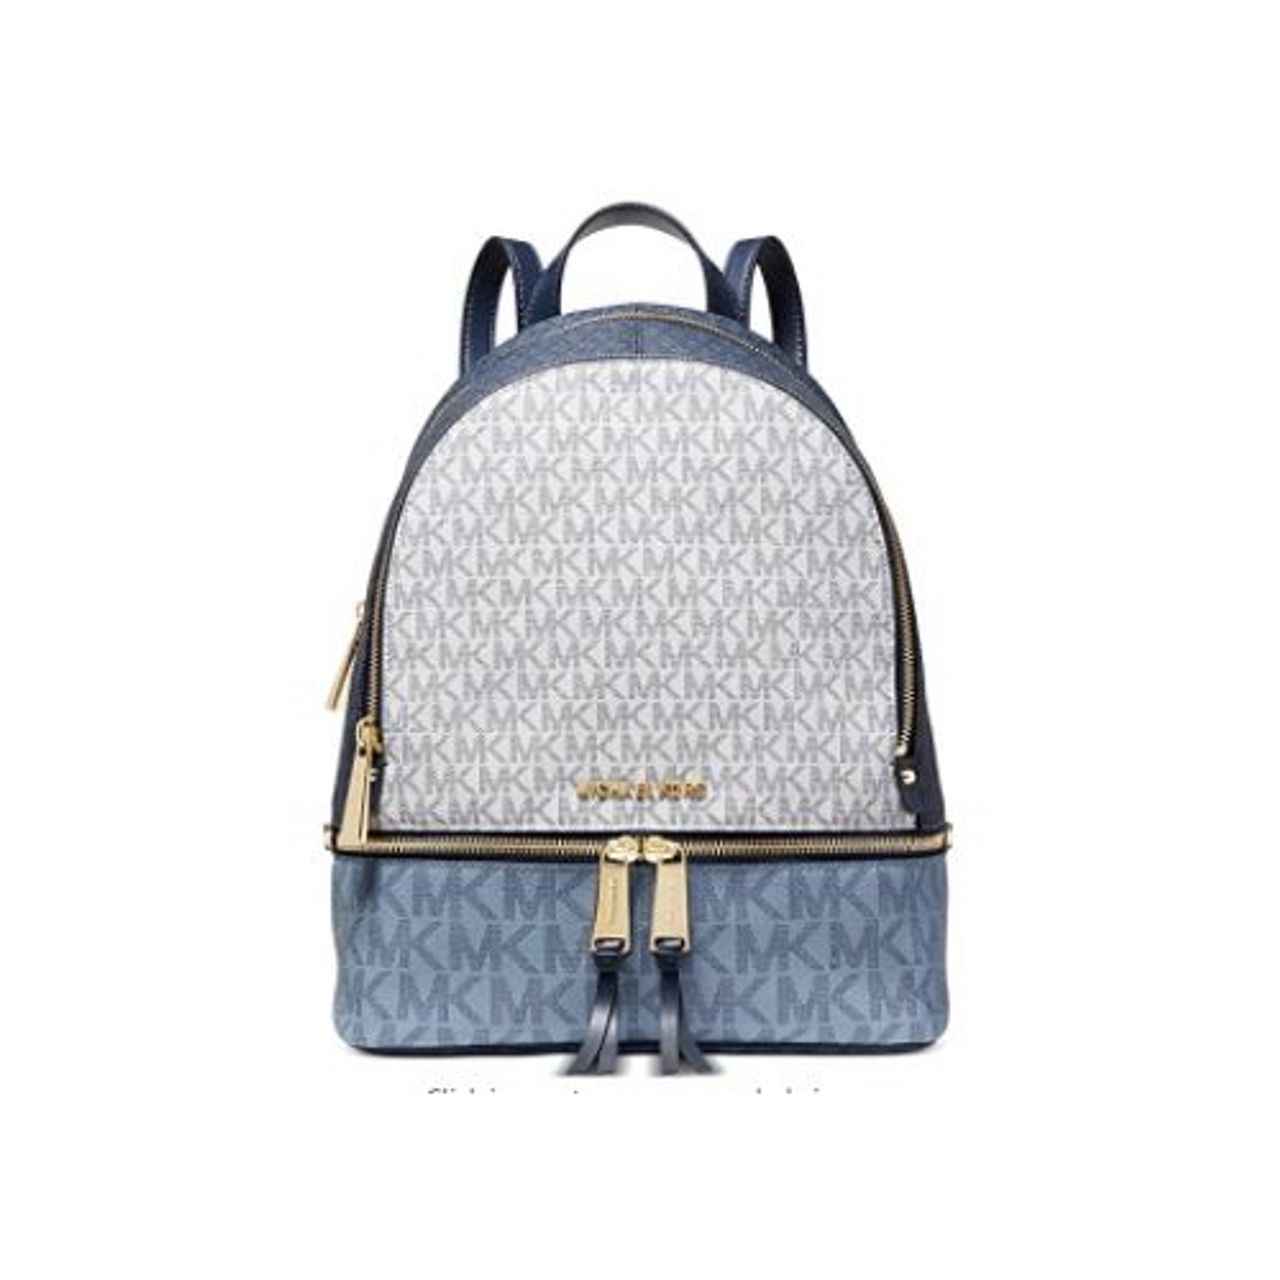 Michael Kors Rhea Zip Medium Backpack Navy/White/Pale Blue One Size30S0GEZB2V-436